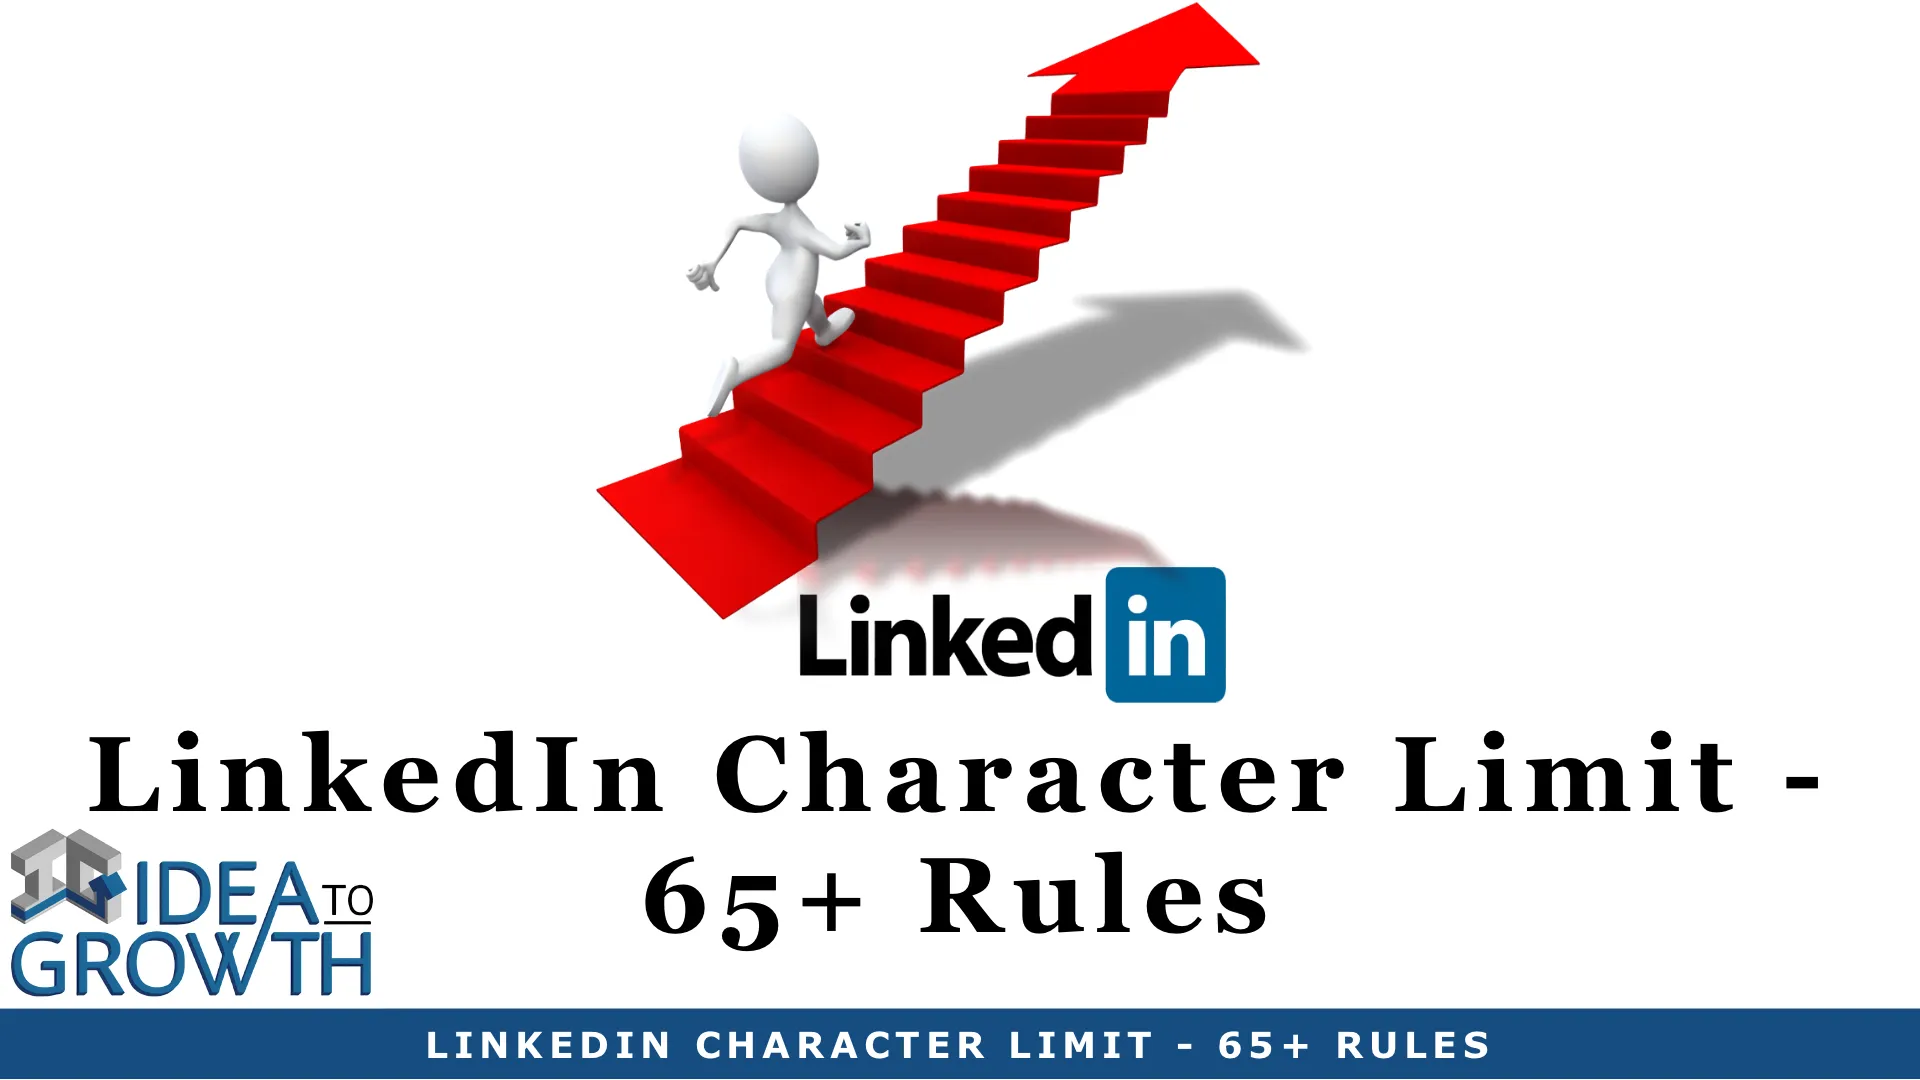 LINKEDIN CHARACTER LIMIT - 65+ RULES